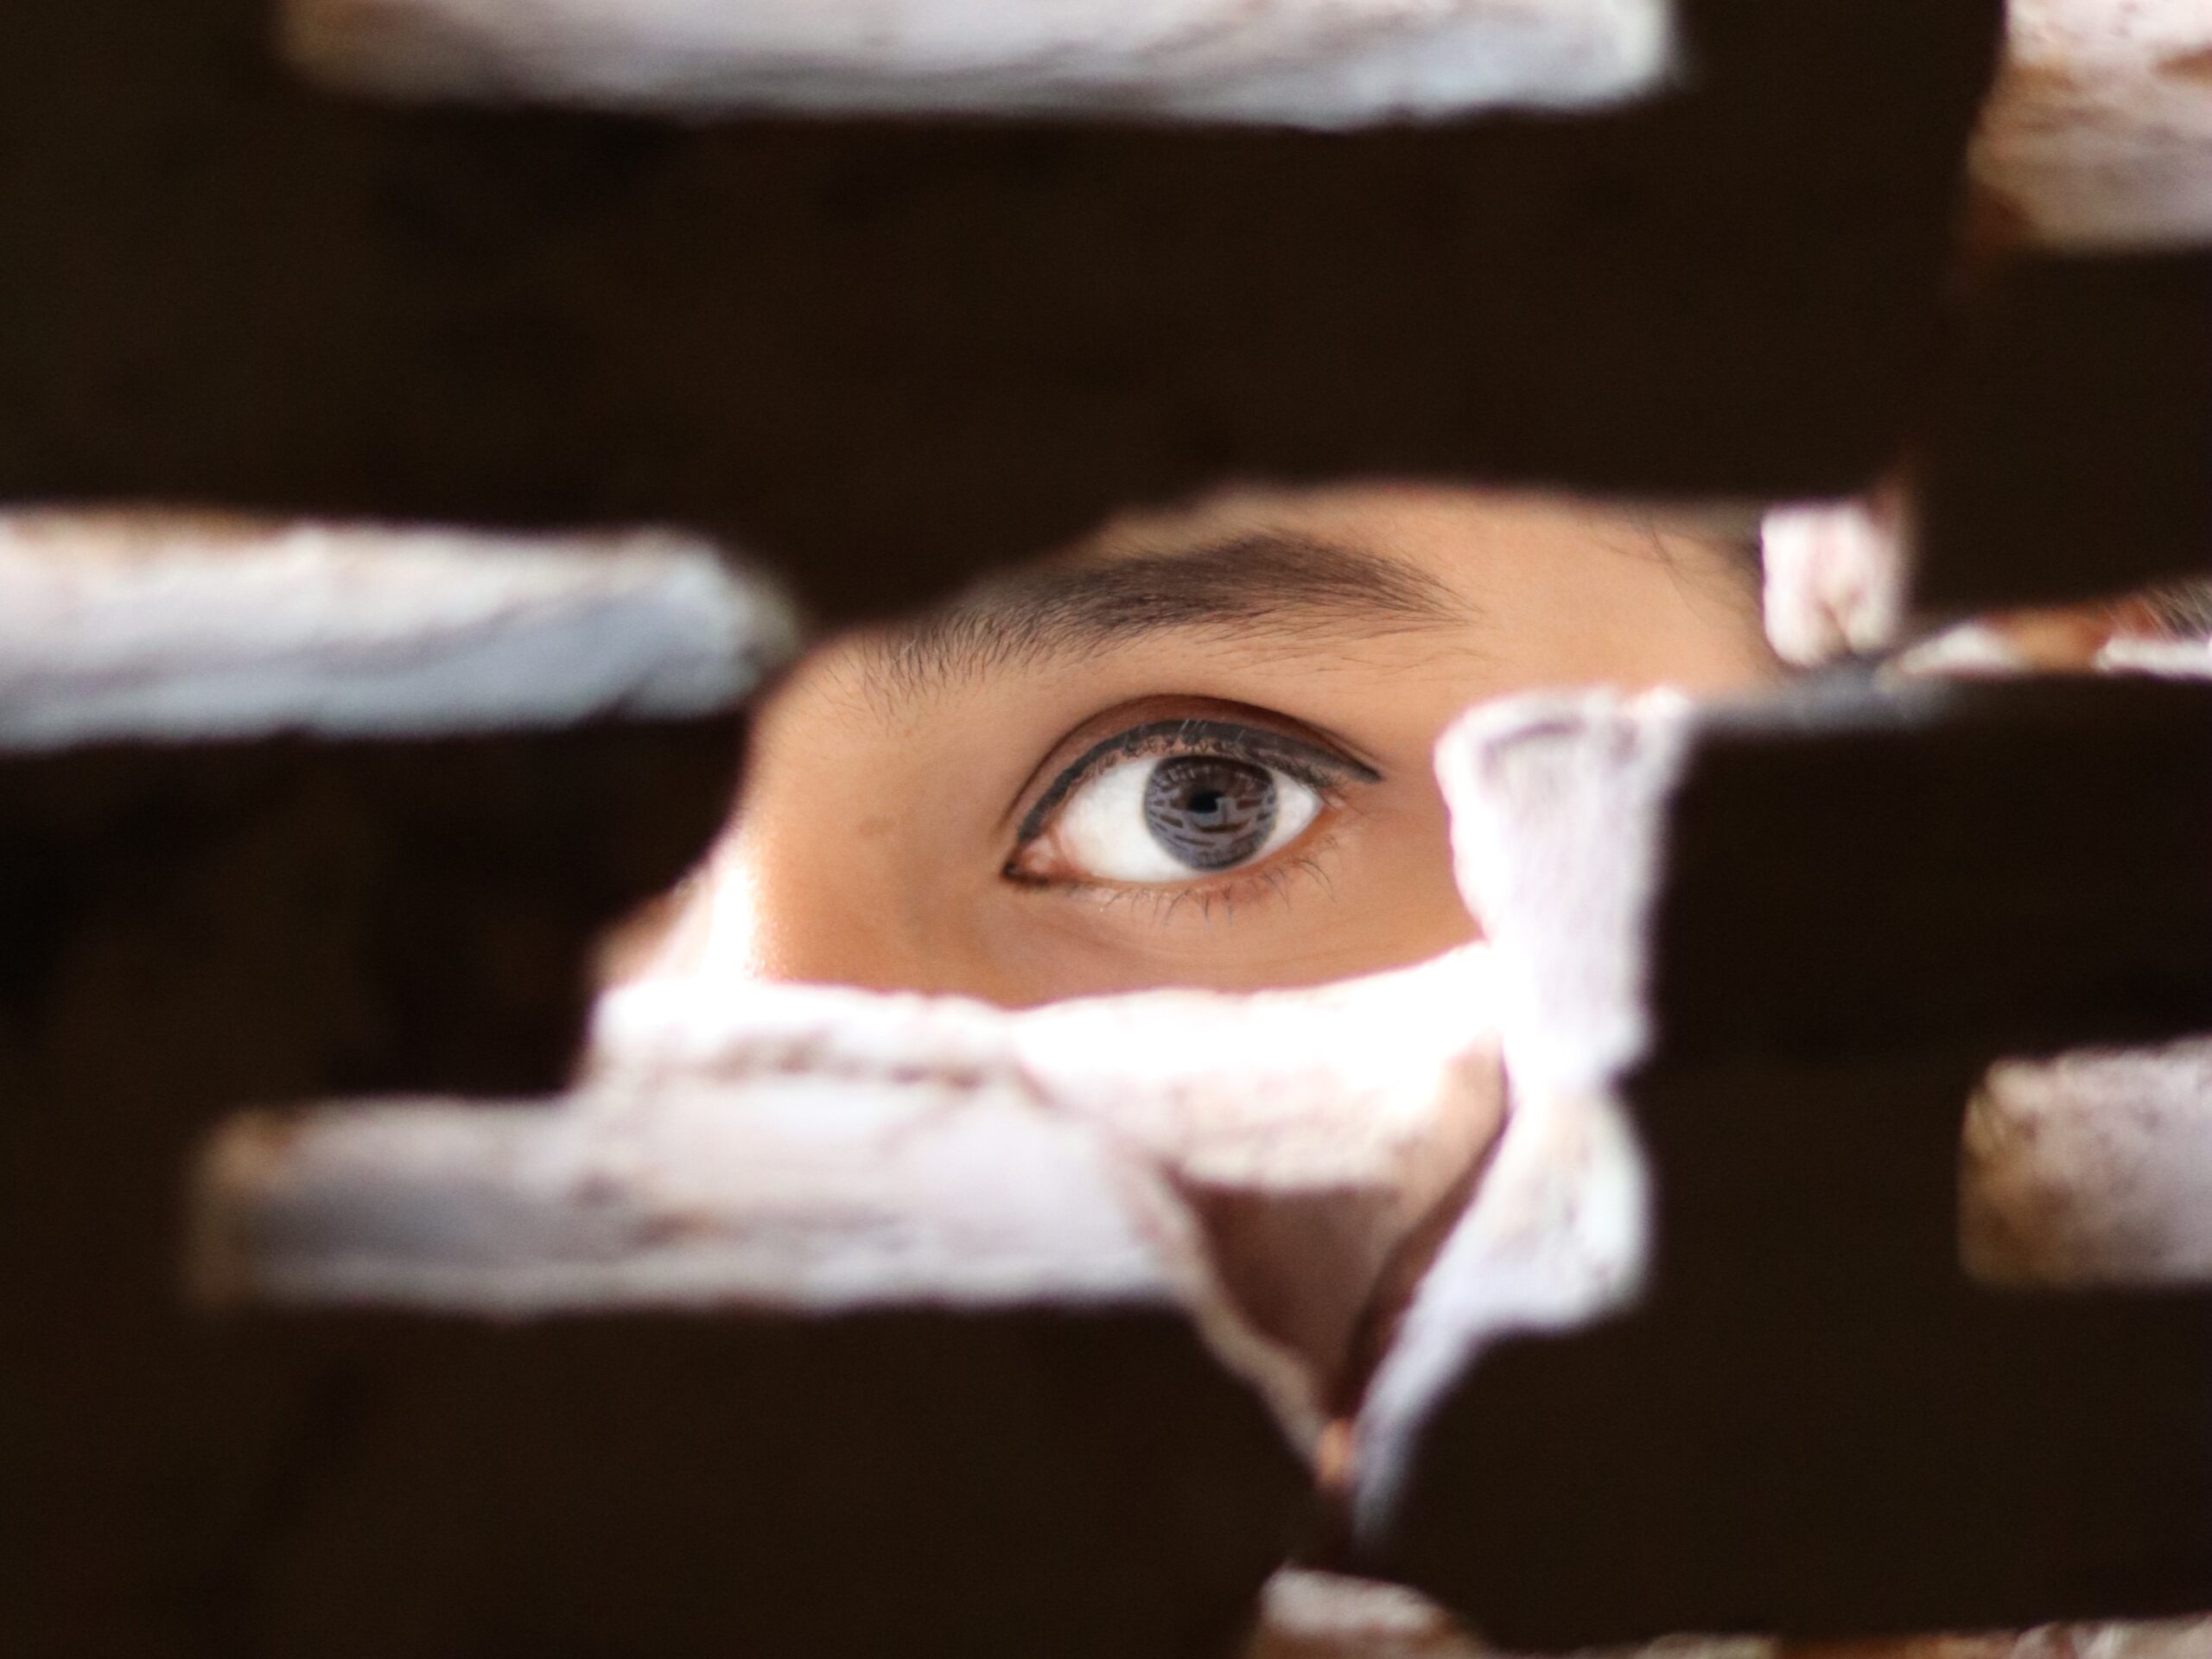 An eye looks through open bricks in a wall.